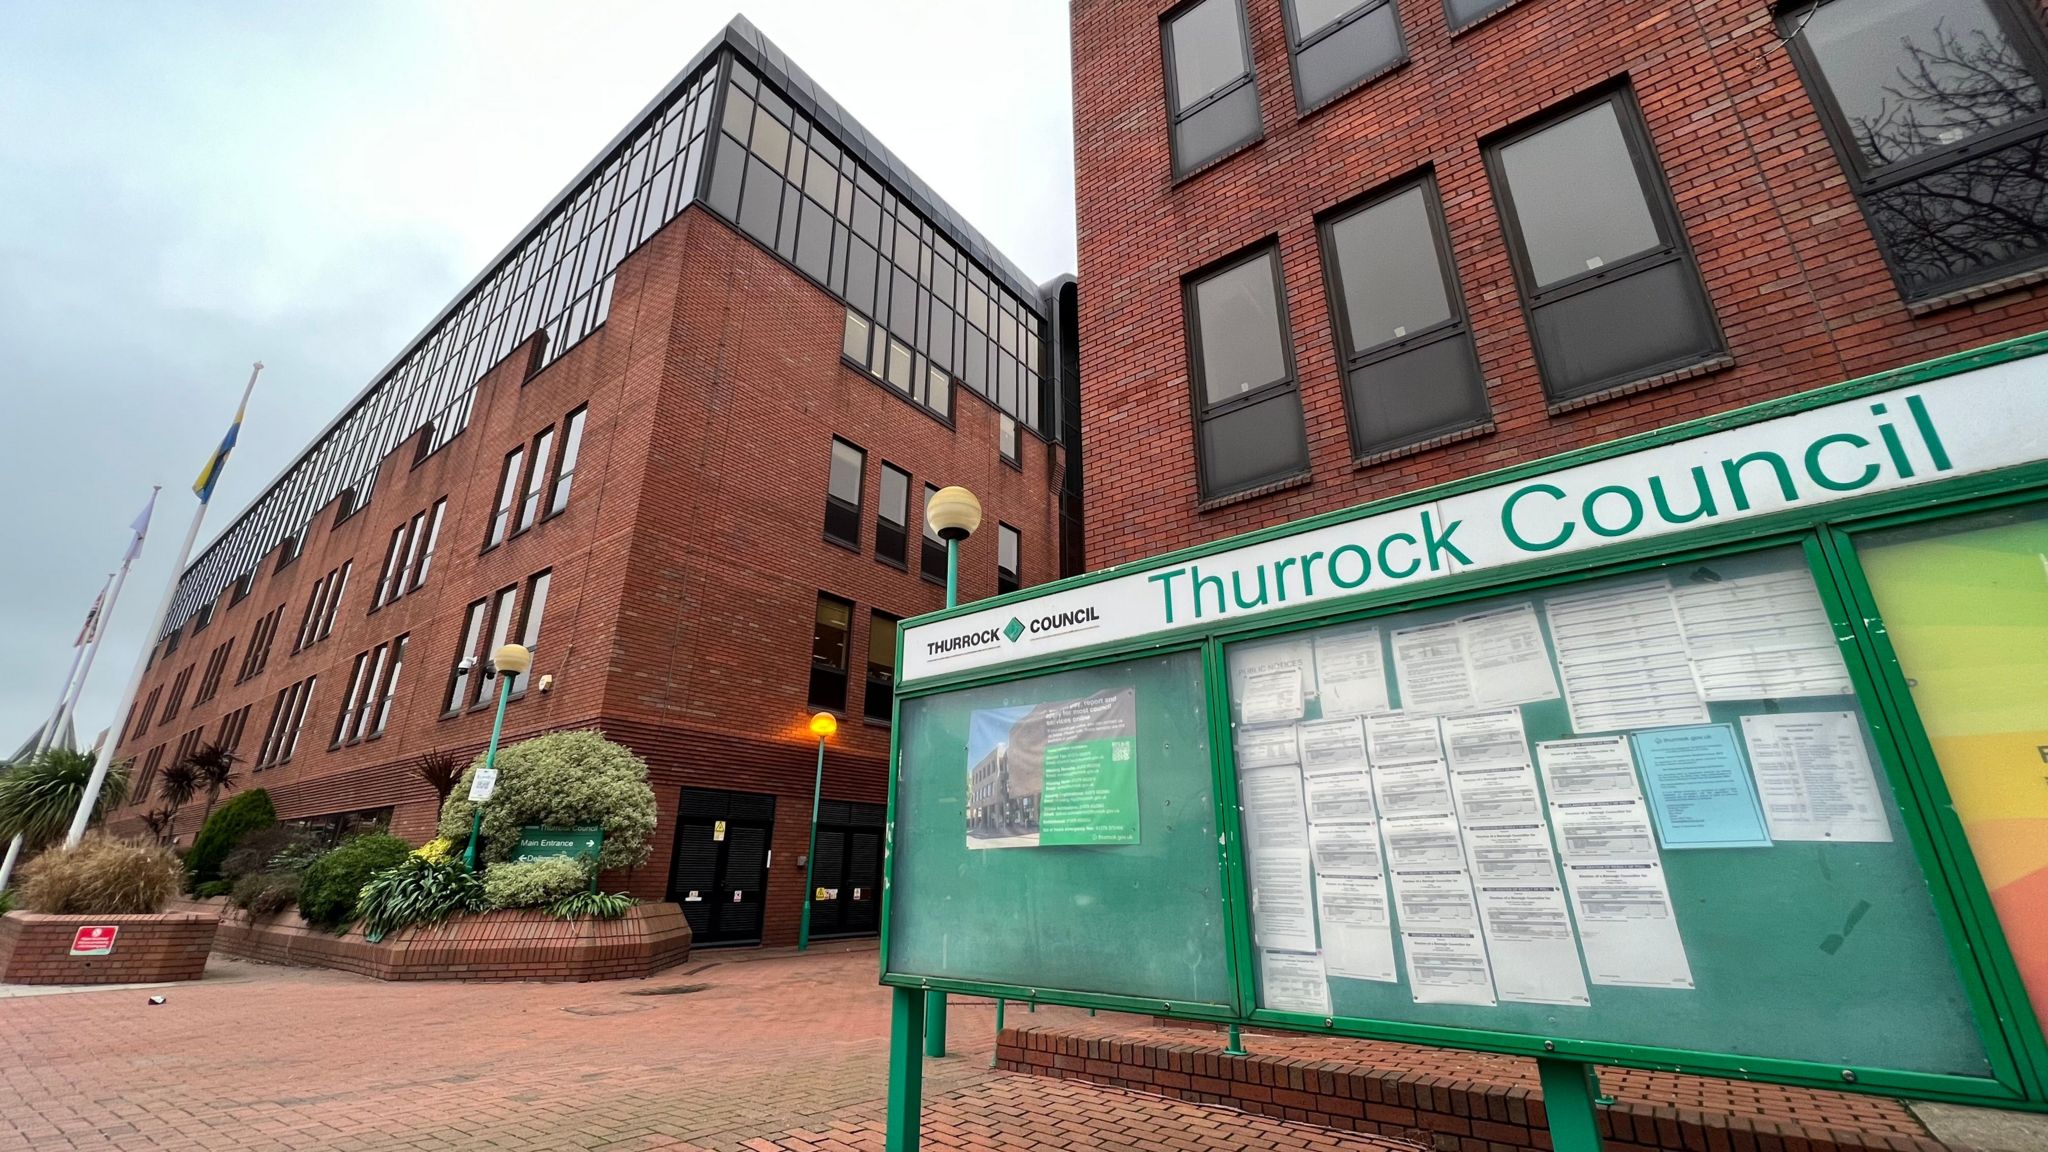 Thurrock council building